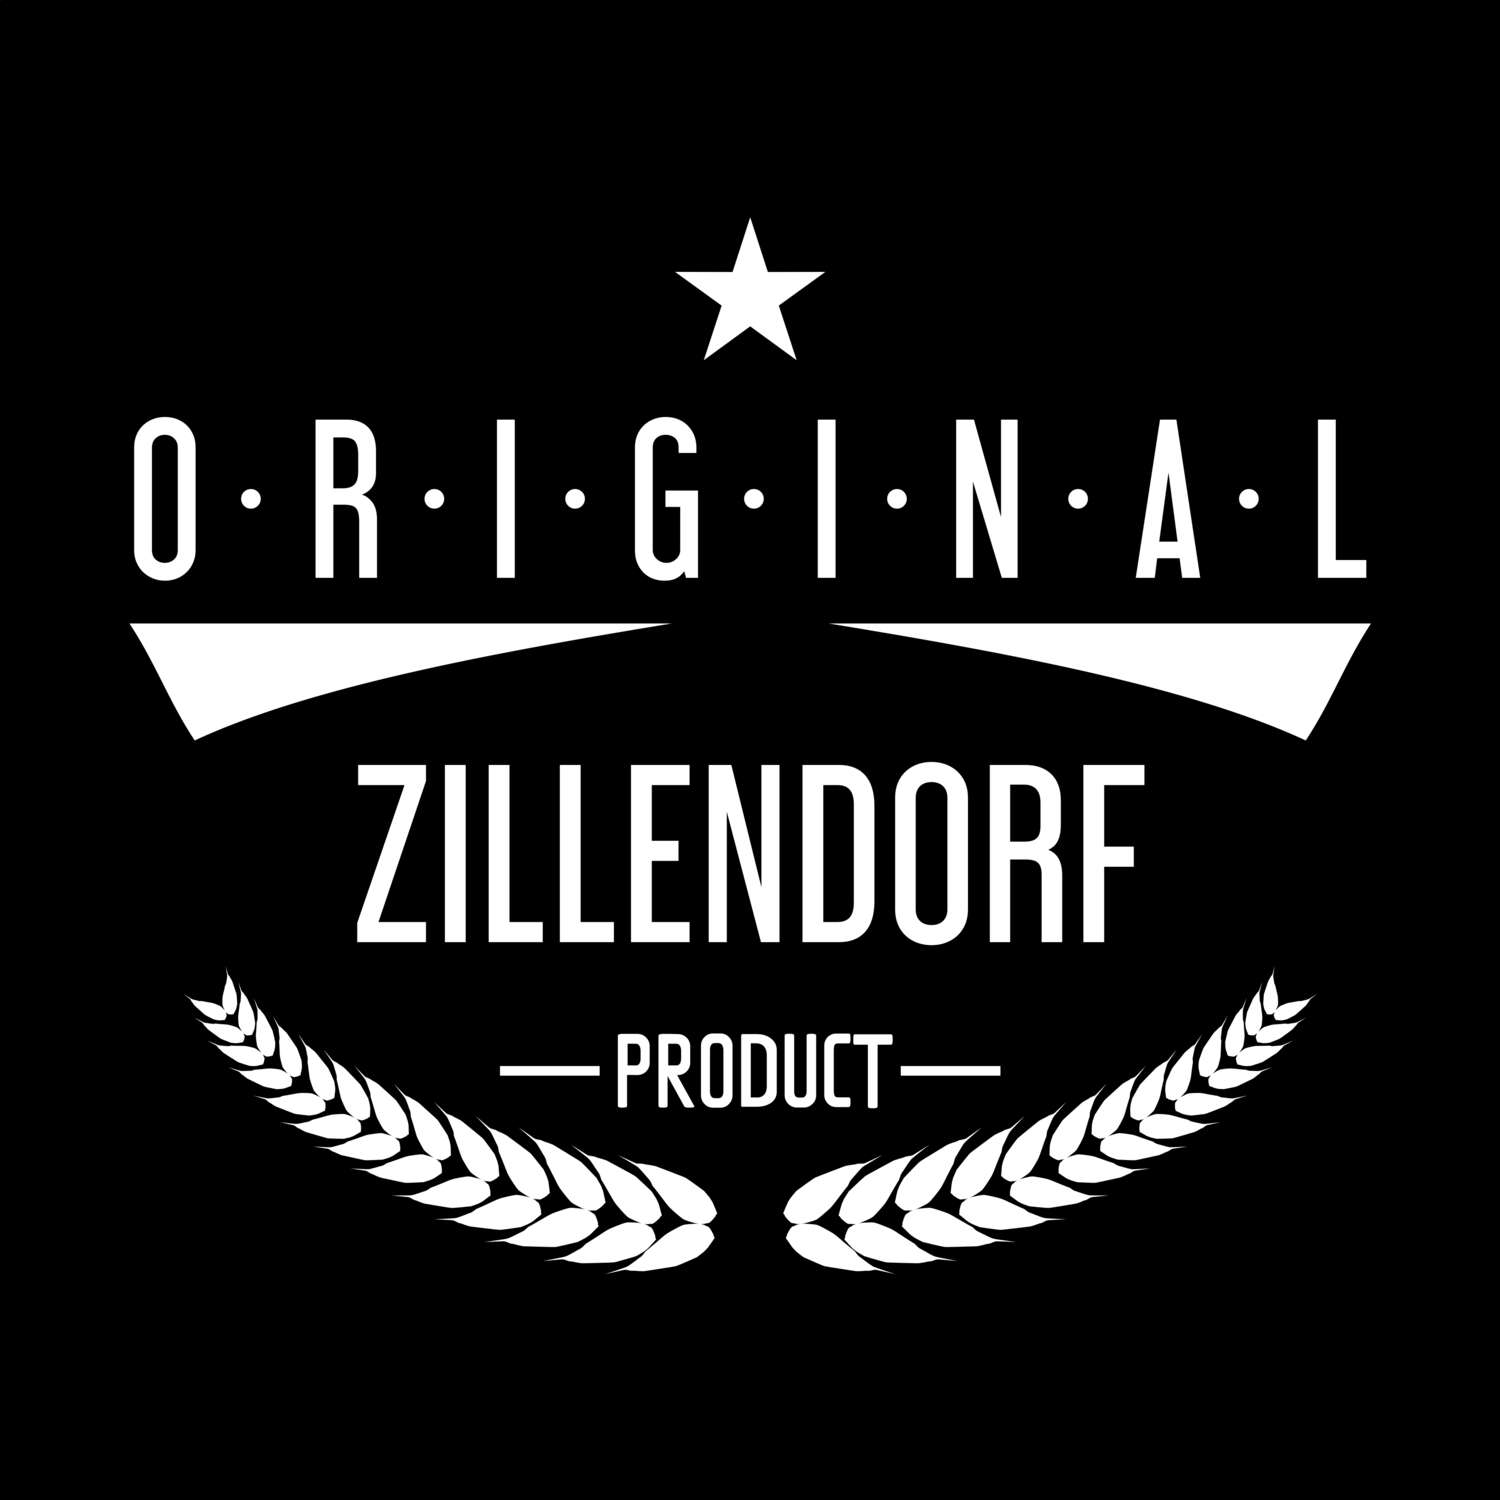 Zillendorf T-Shirt »Original Product«